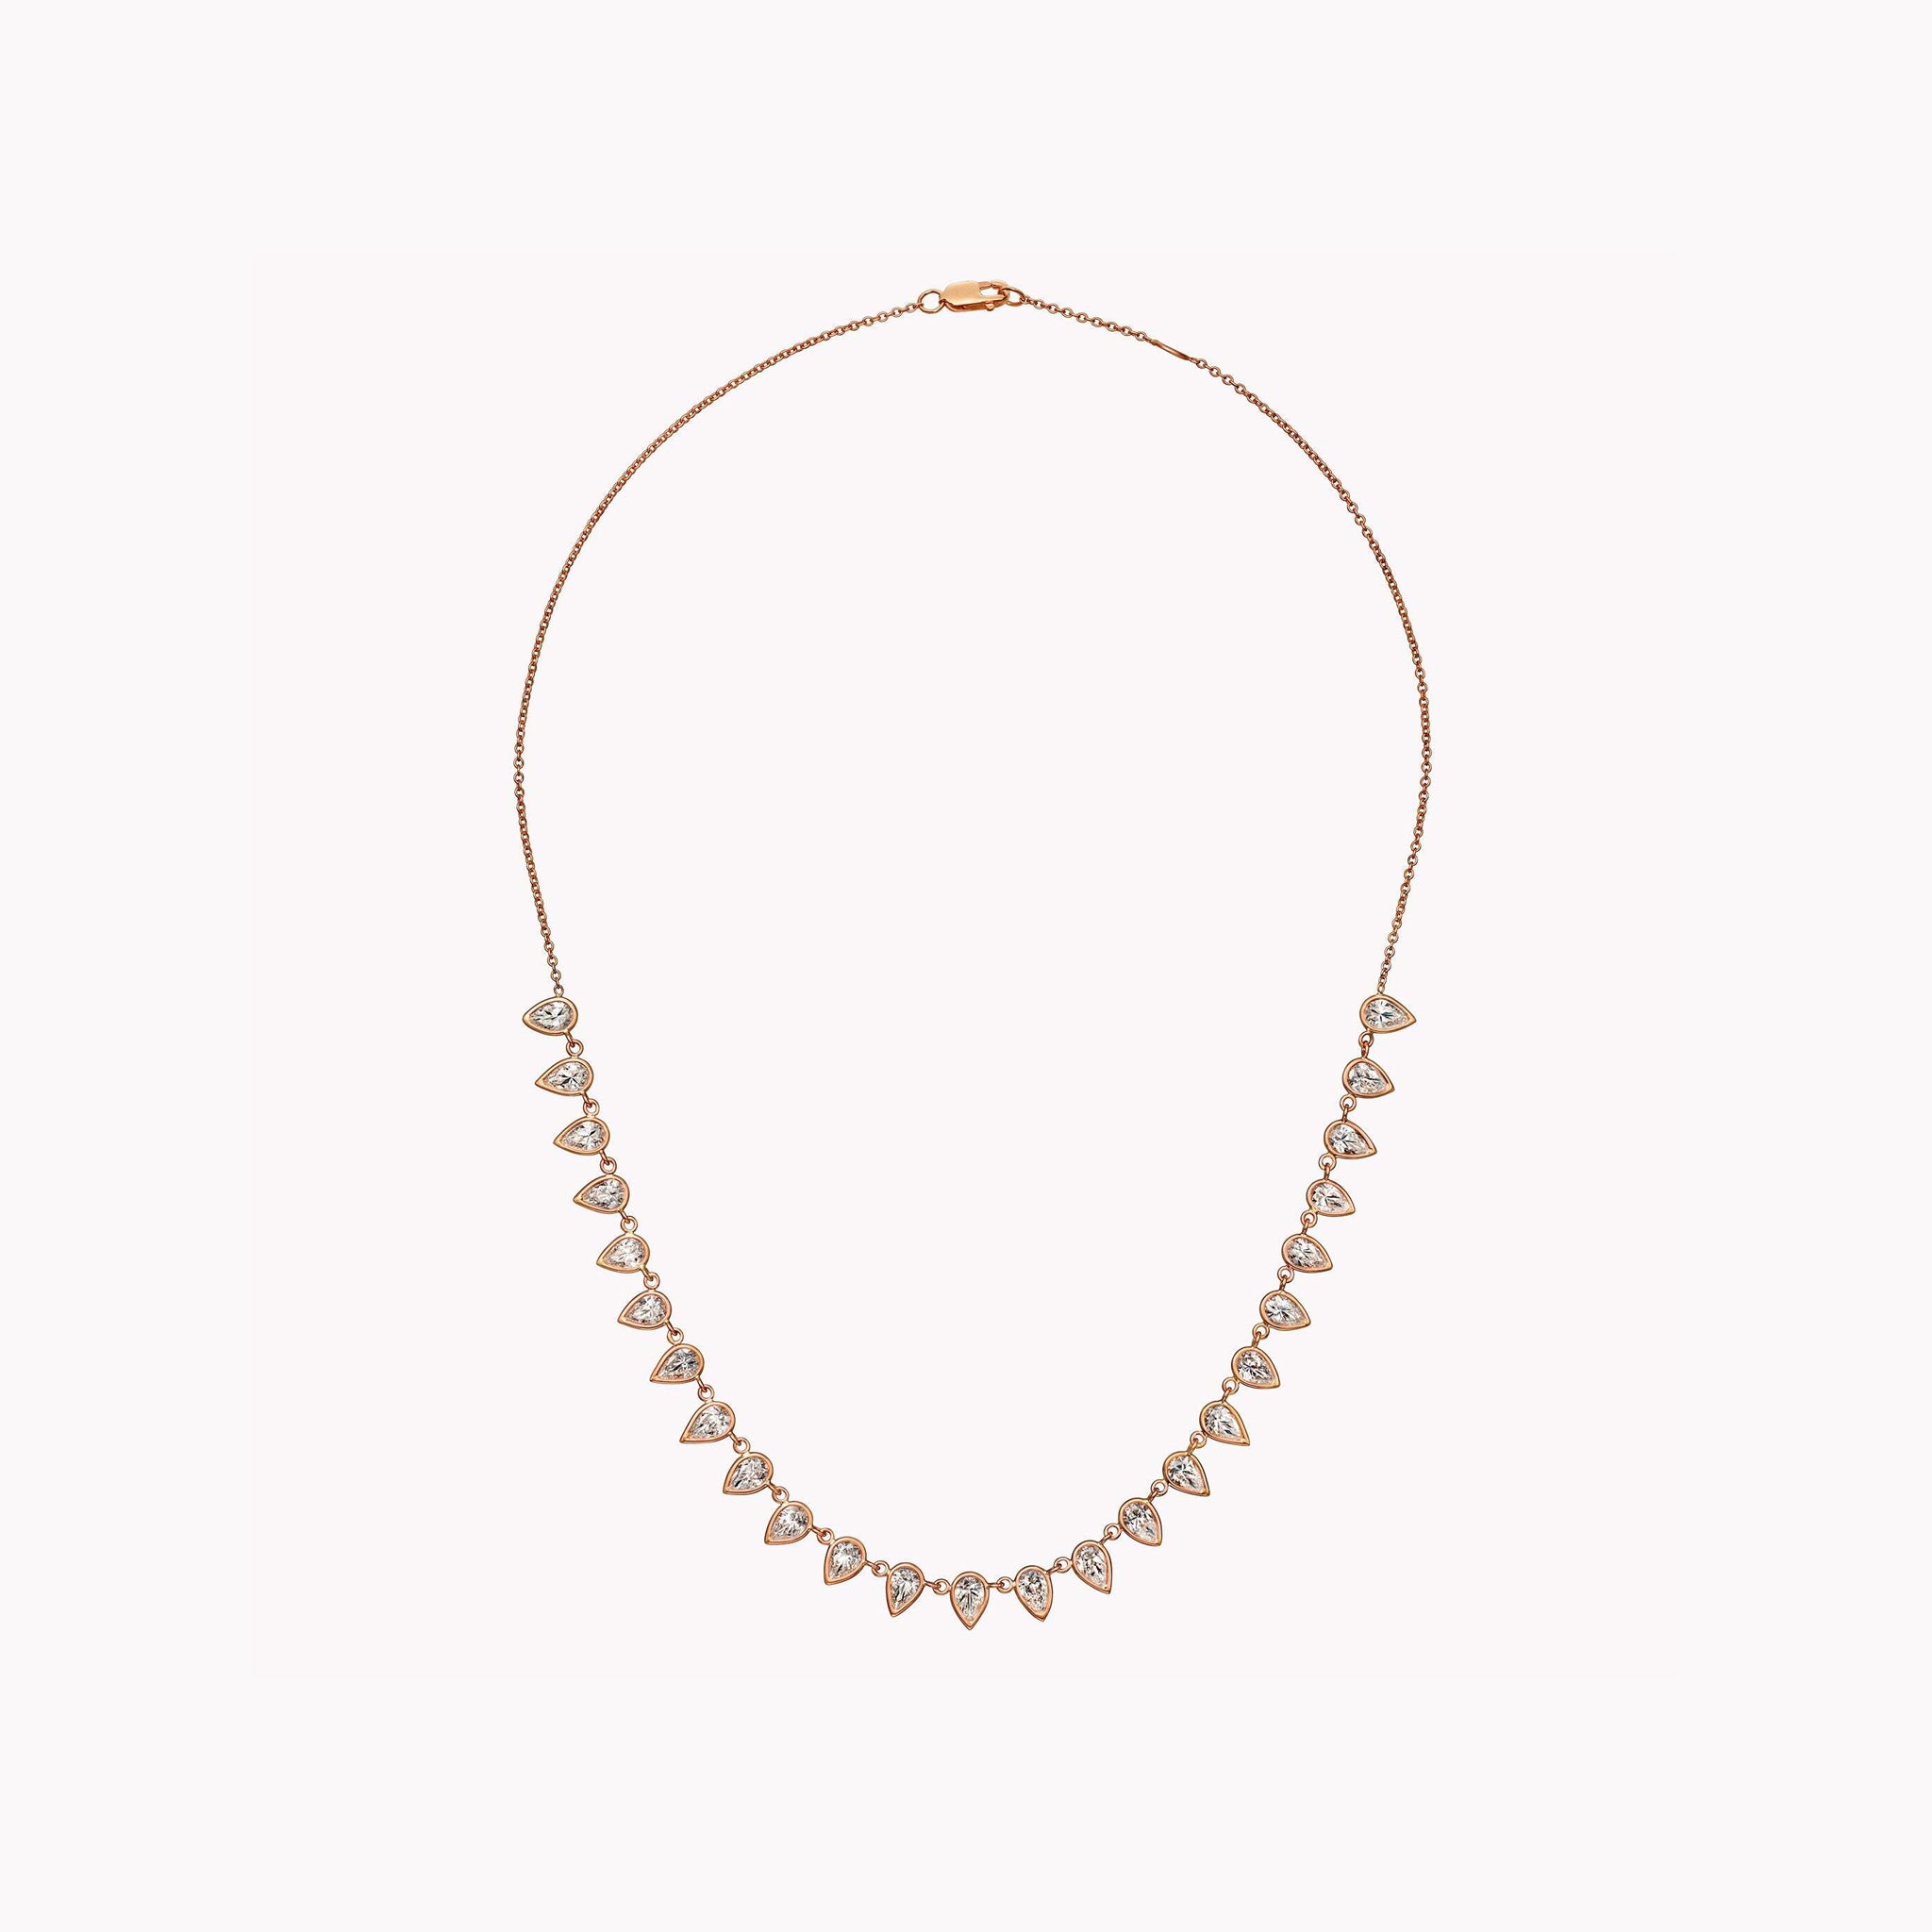 The Lena Pear Shape Necklace